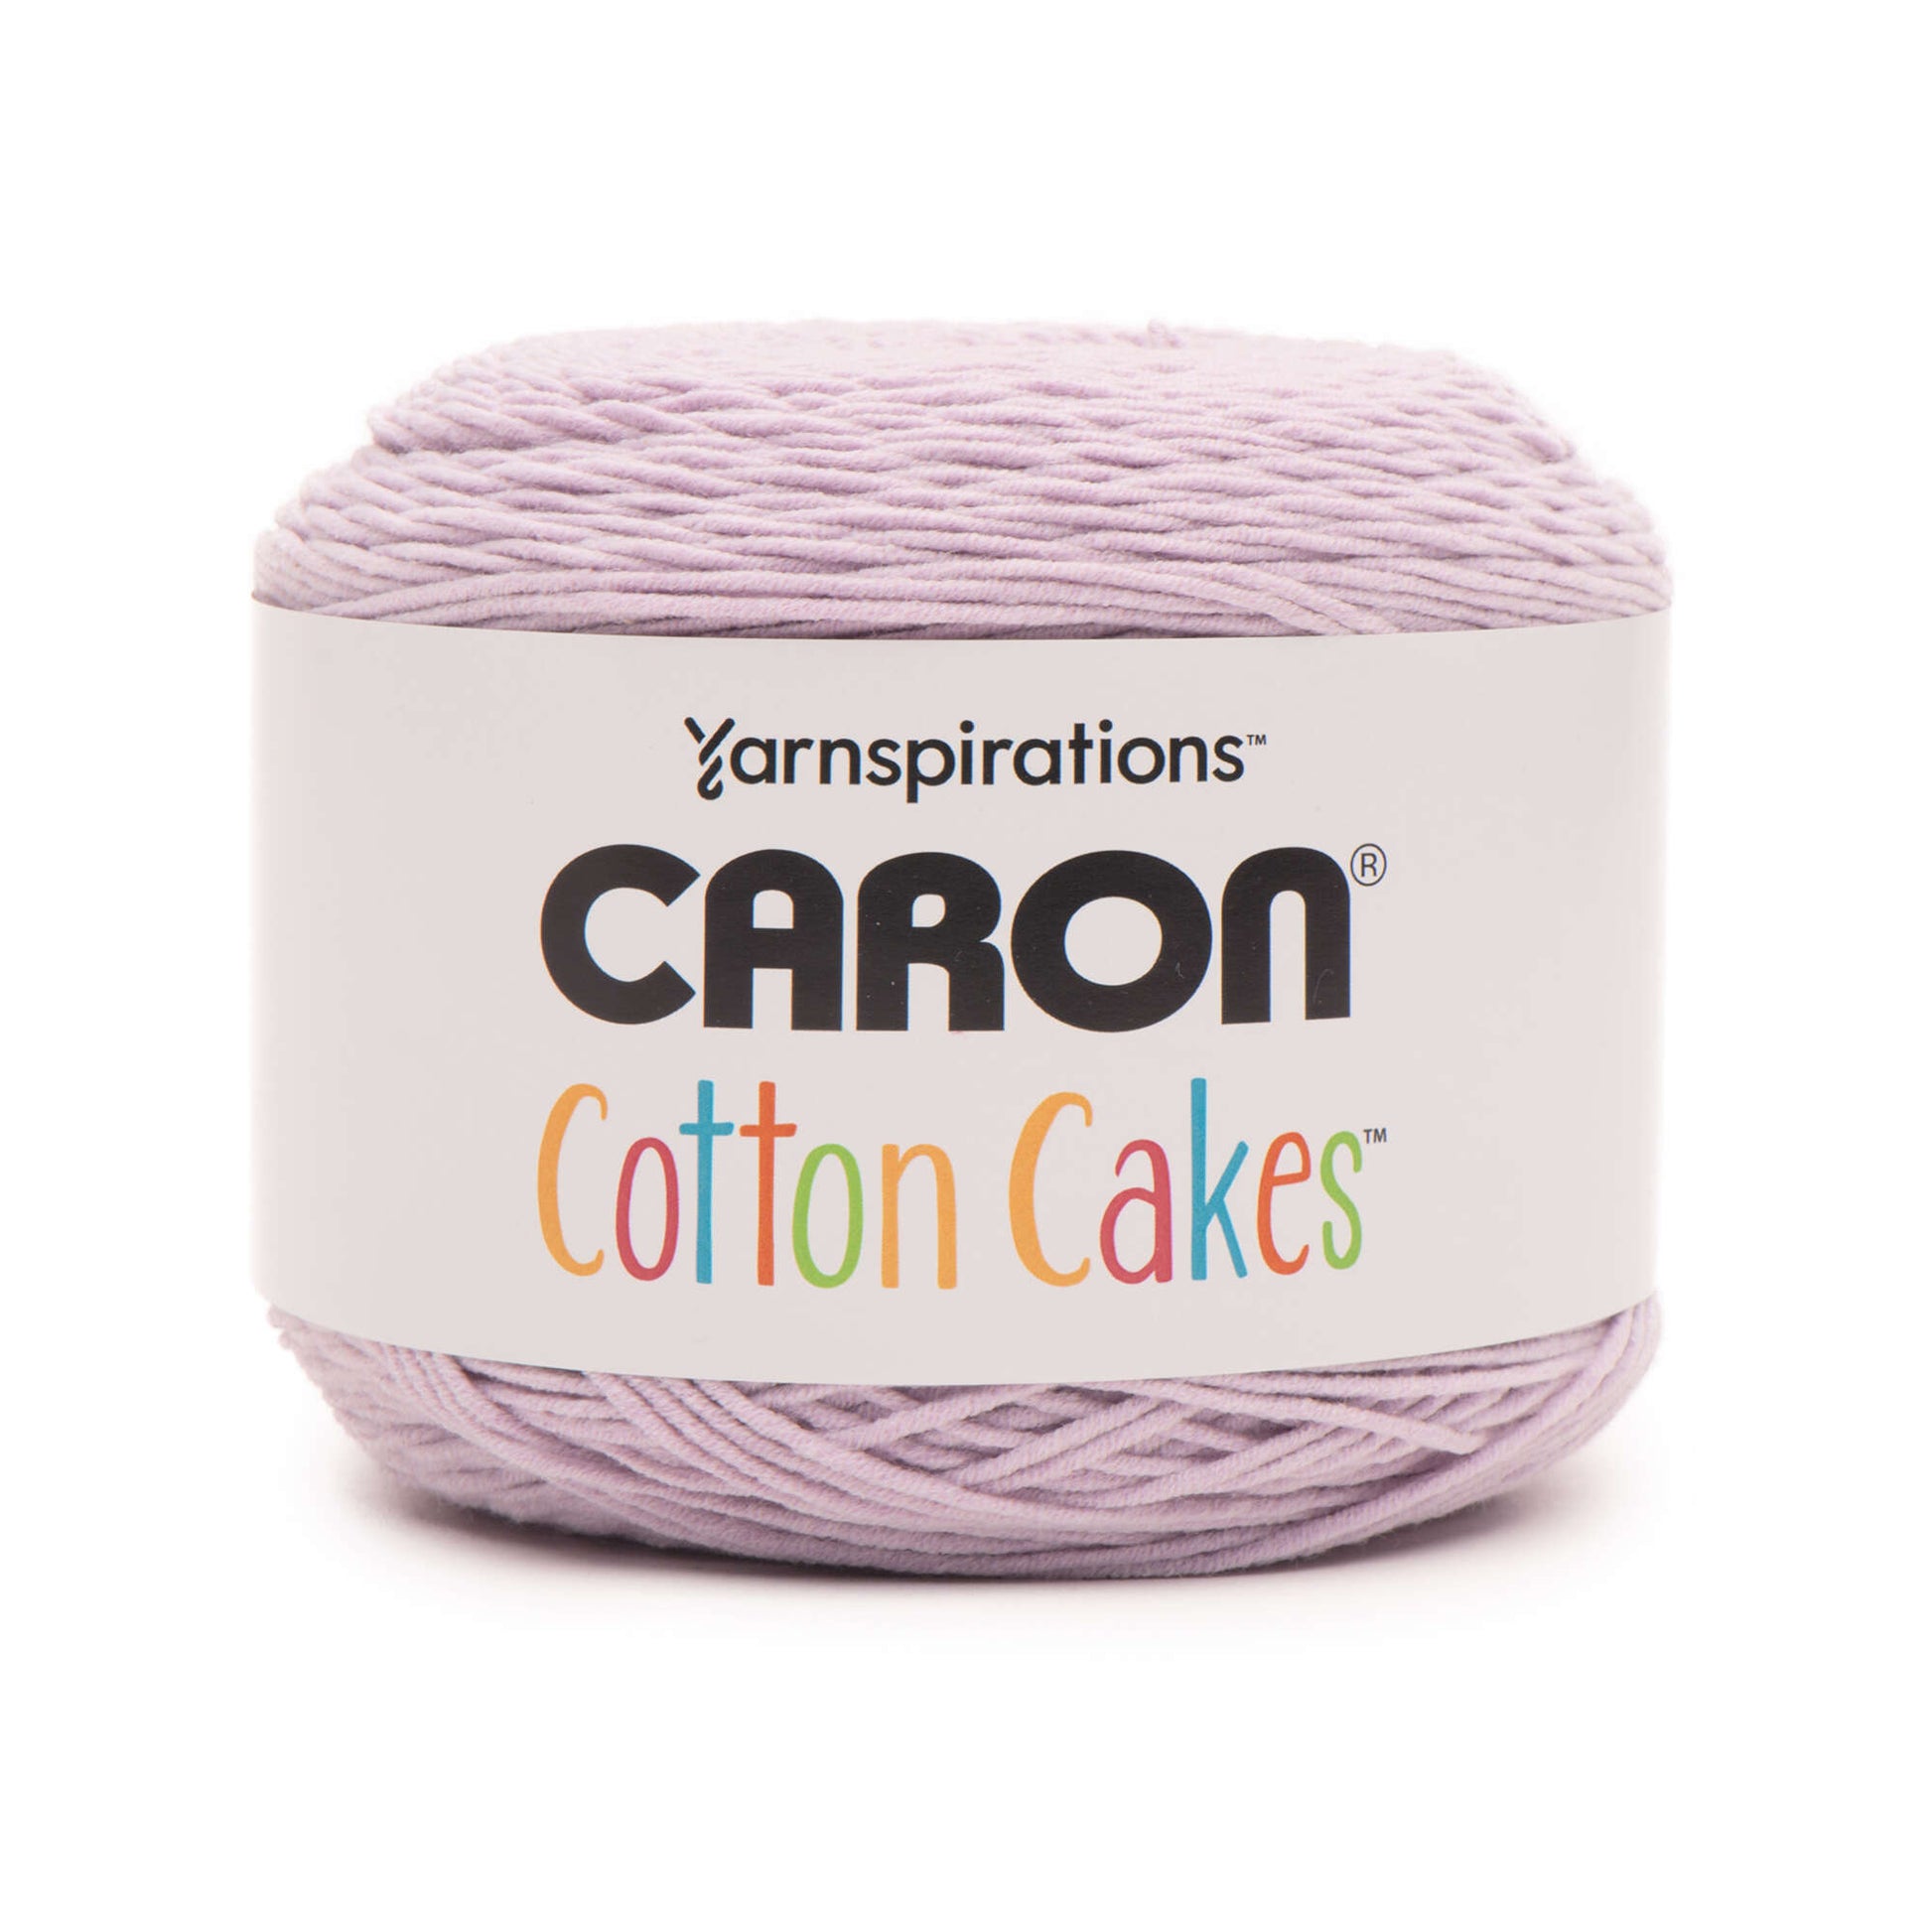 Caron Cotton Cakes Yarn (250g/8.8oz) - Discontinued Shades